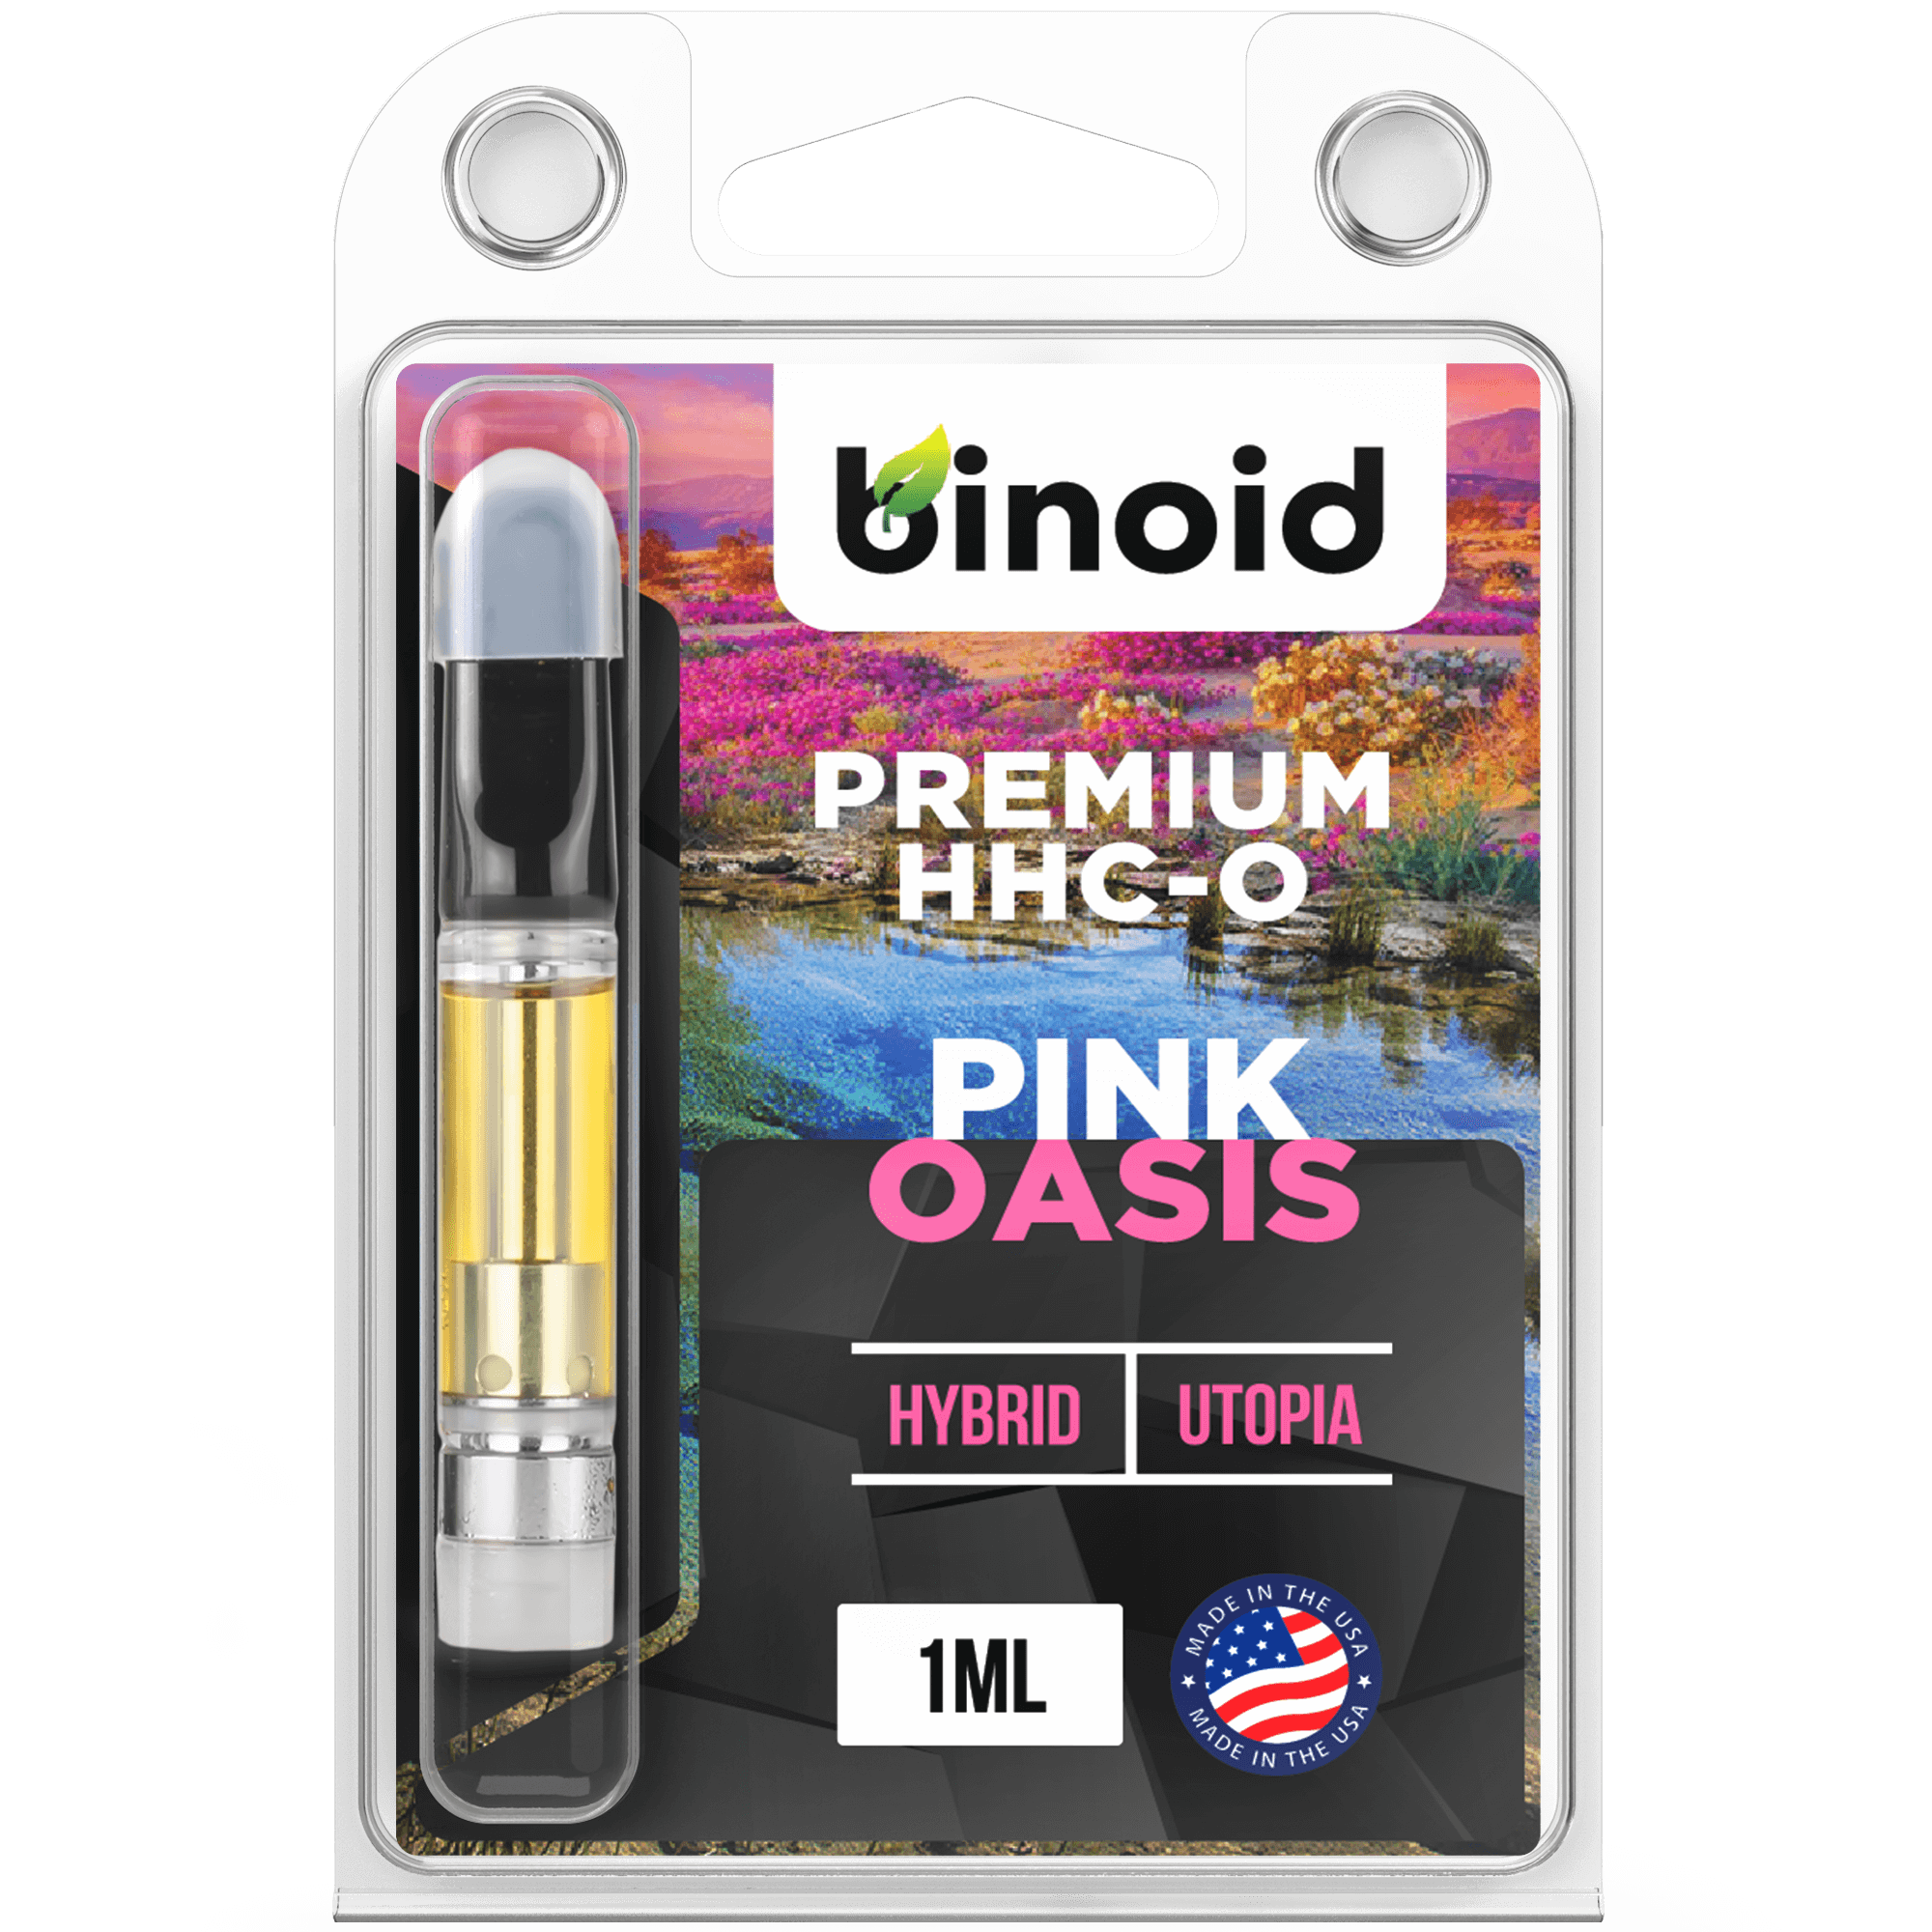 HHC-O Vapes For Sale - Pink Oasis | Buy HHC-O Vape Cartridges